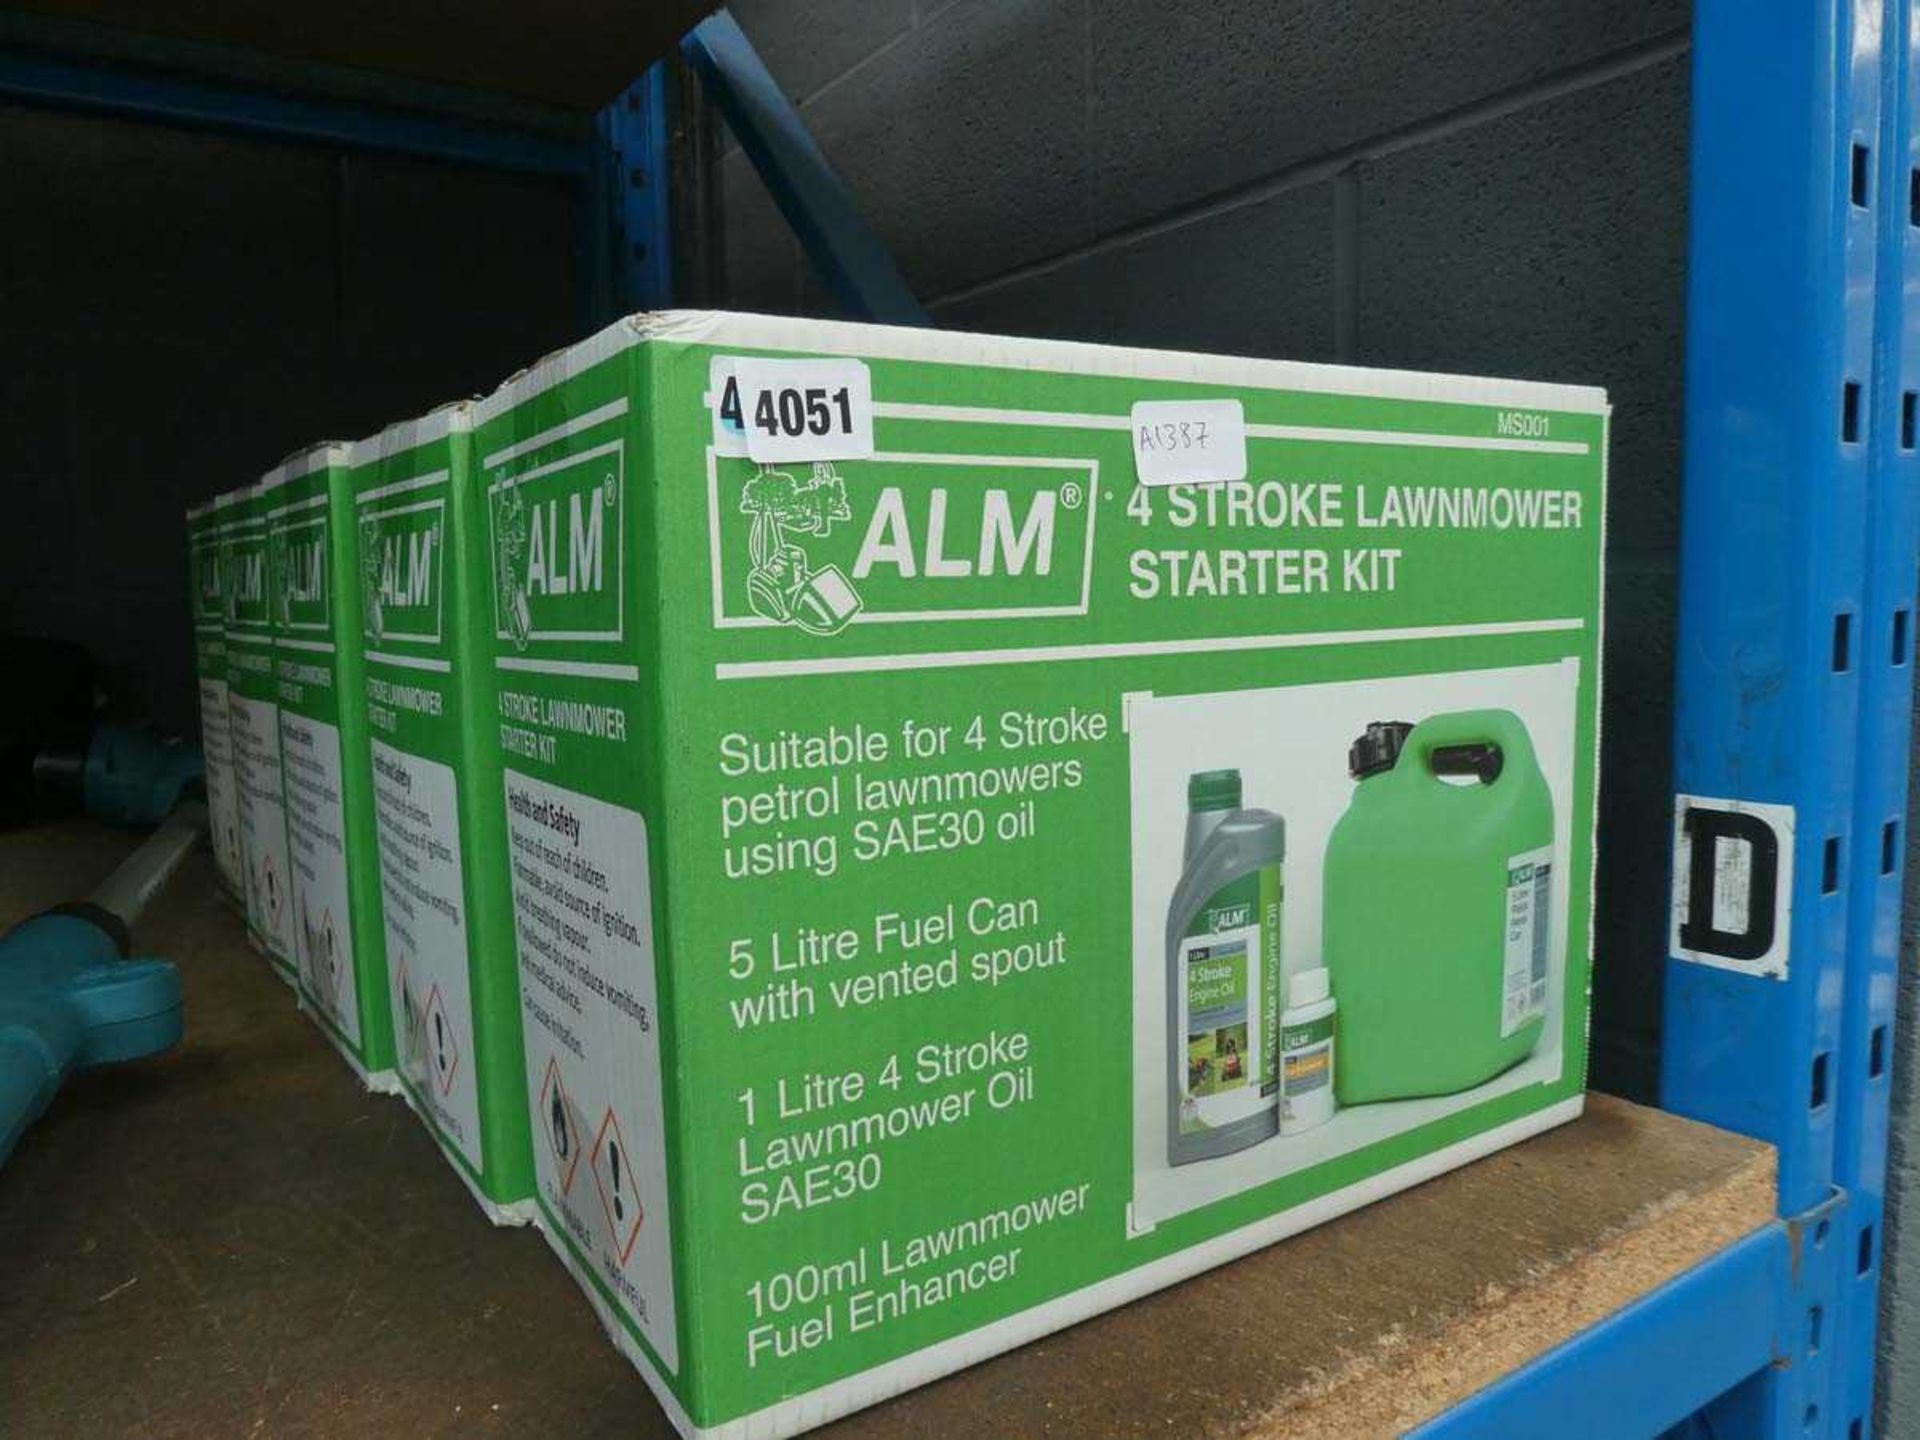 6 boxes of Alm 4 stroke lawnmower starter kits